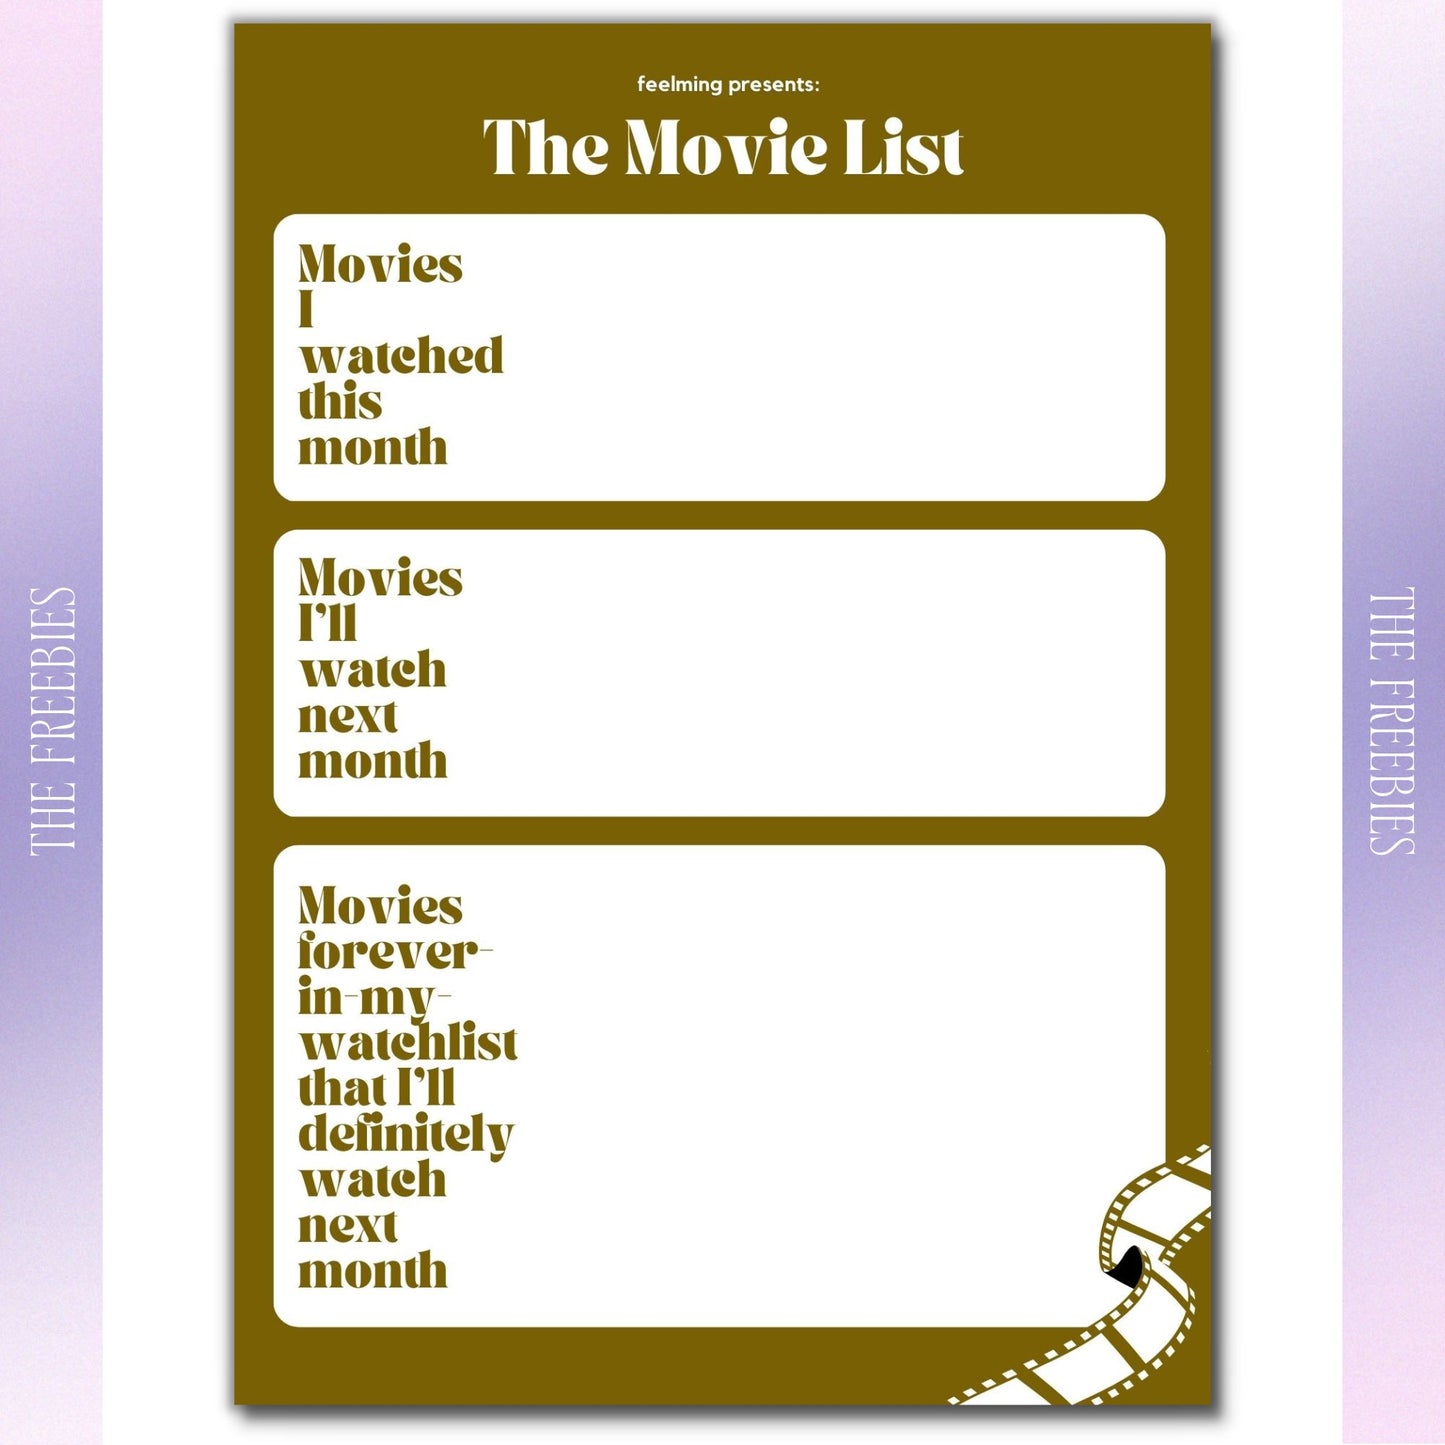 The Movie List